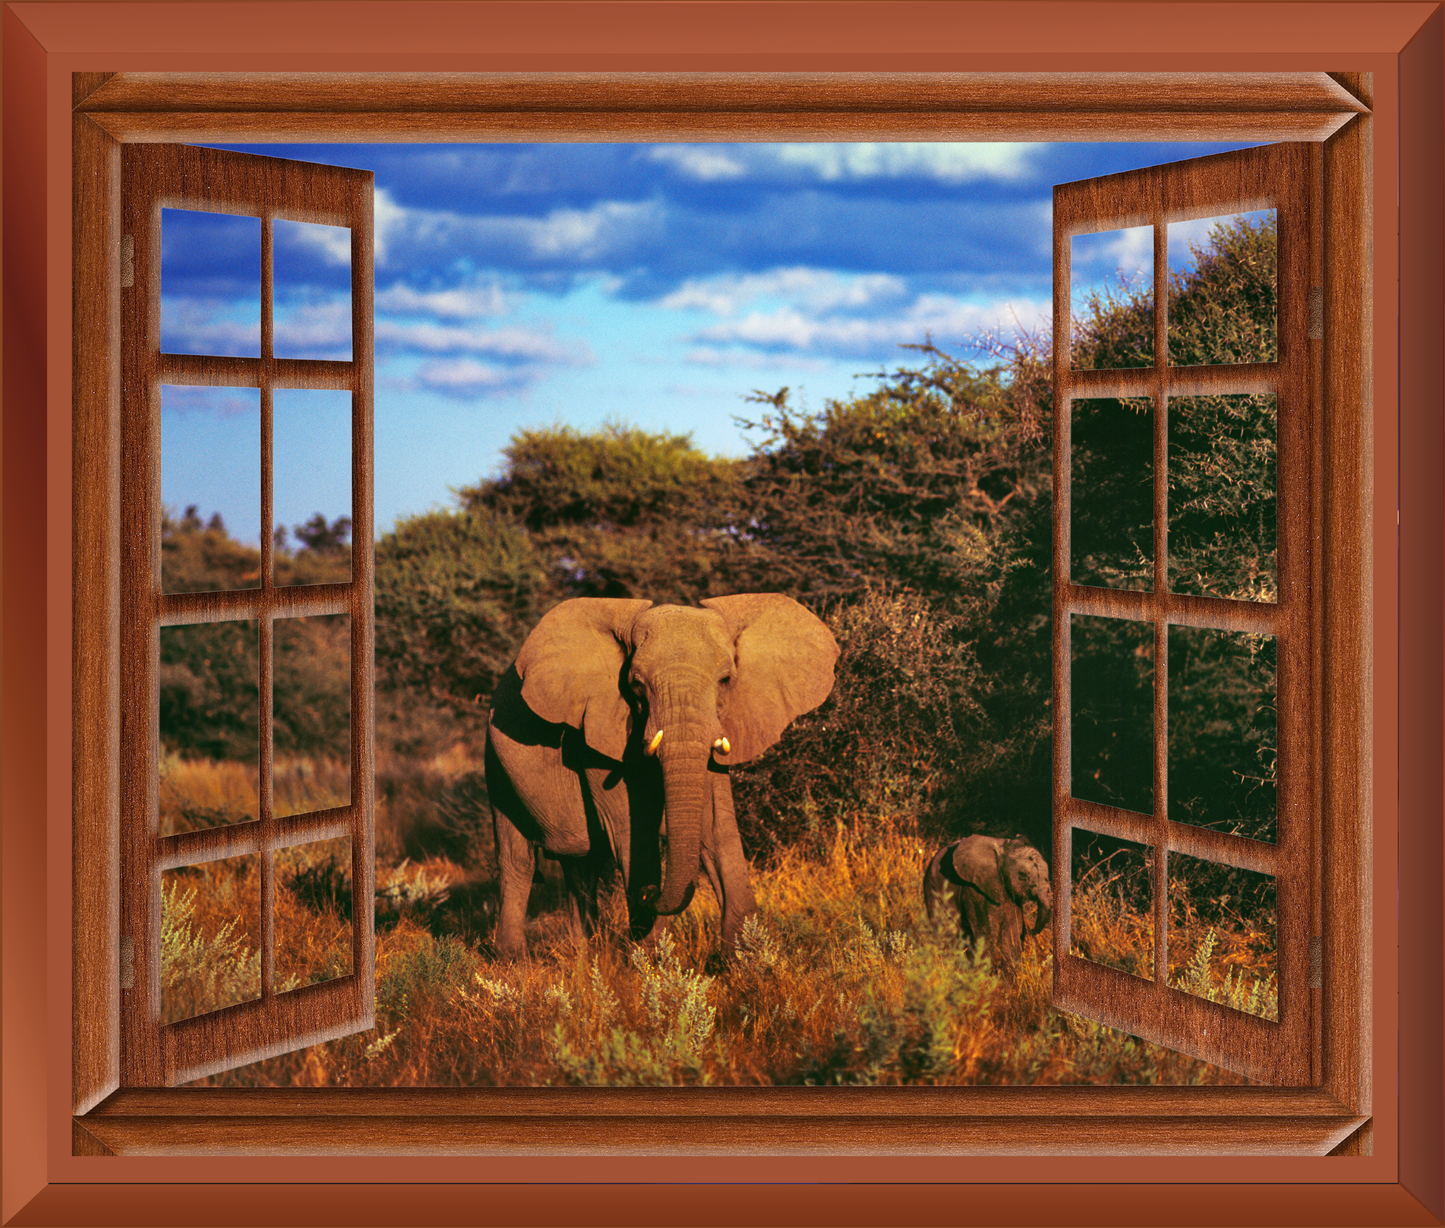 Elephant Window Wall Tapestry